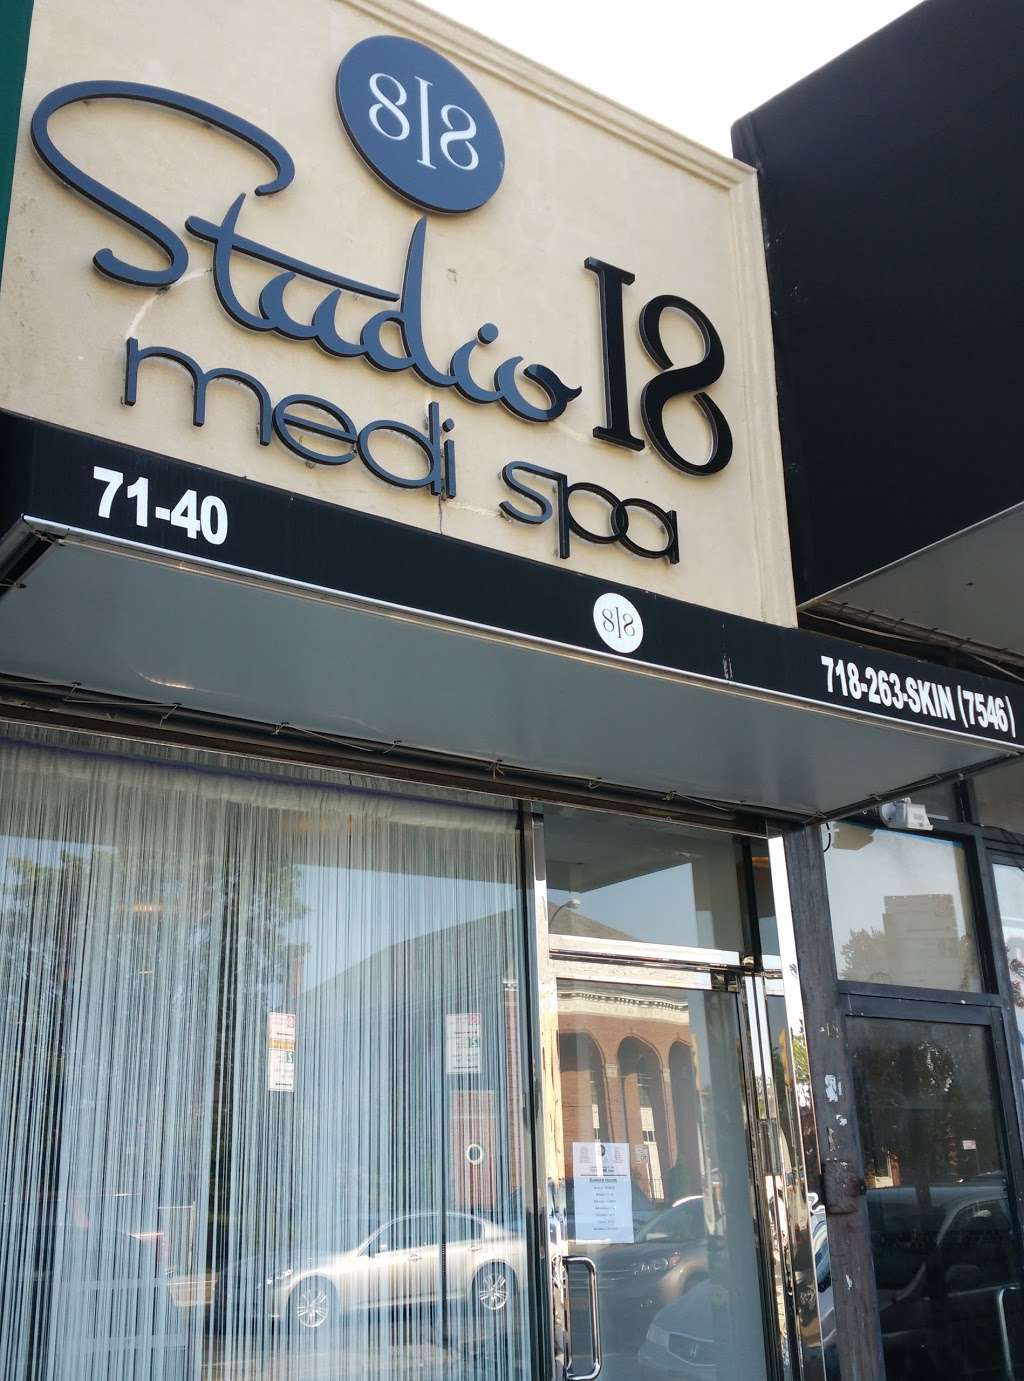 Studio 18 Medi Spa | 7140 Main St, Flushing, NY 11367, USA | Phone: (718) 263-7546